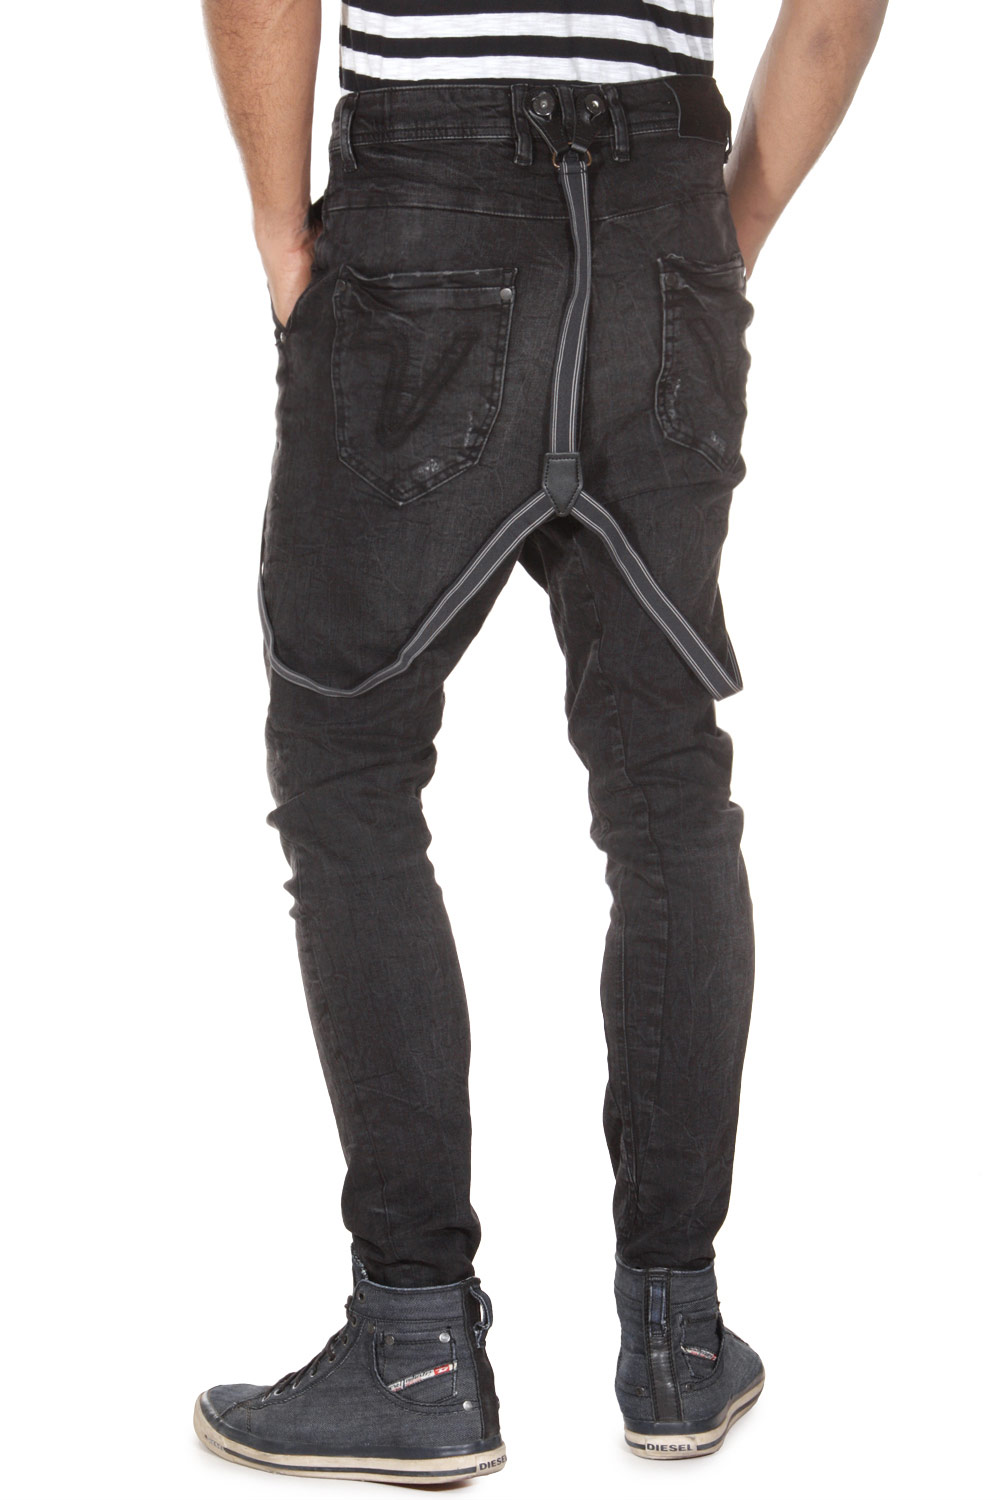 VSCT Brad Chambre Pant Jeans Hose mit abnehmbaren Hosenträger 